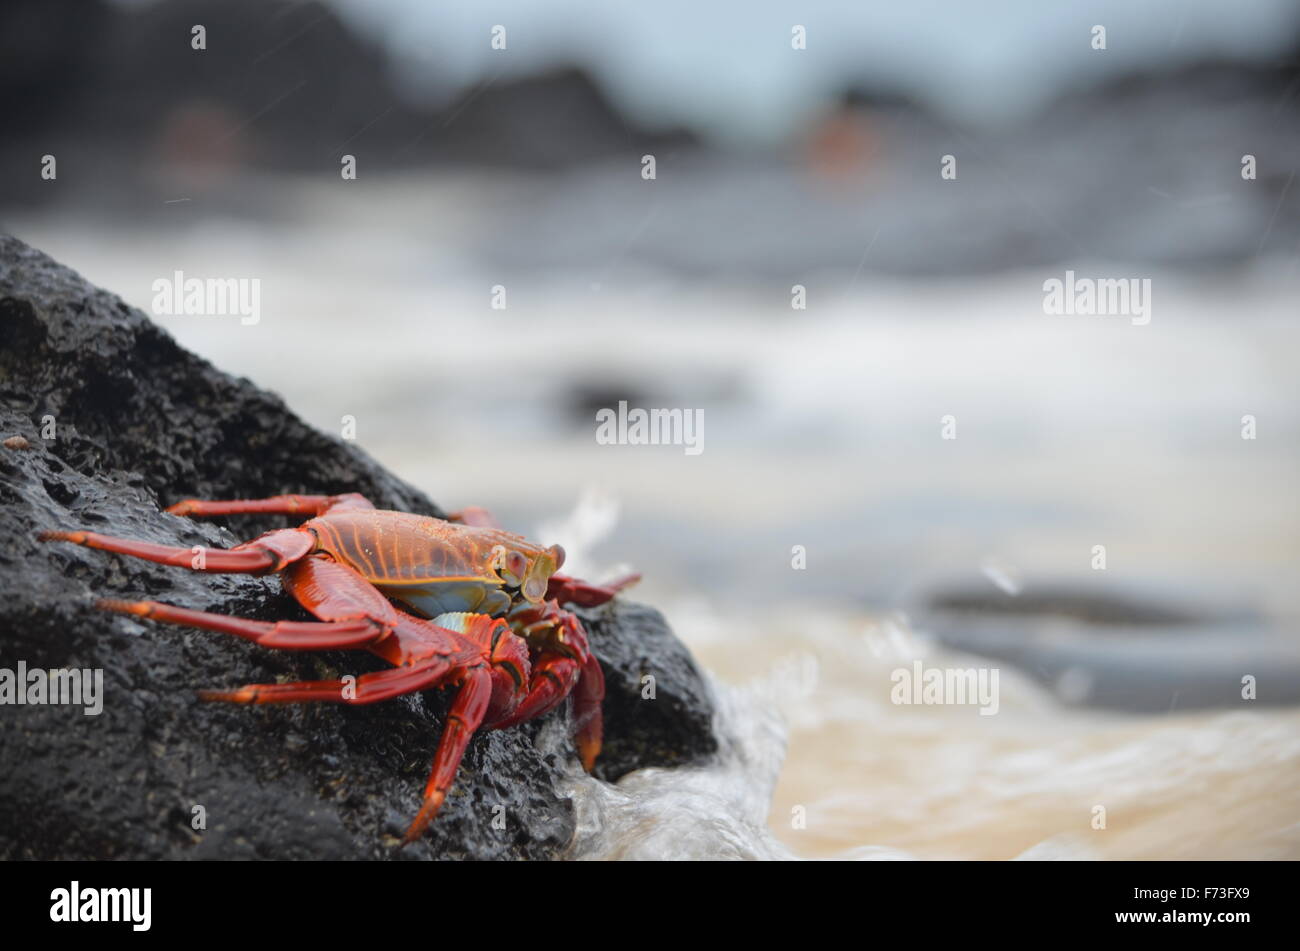 Sally lightfoot crabs (Grapsus grapsus) walk across volcanic rocks in the Galapagos Islands. Stock Photo